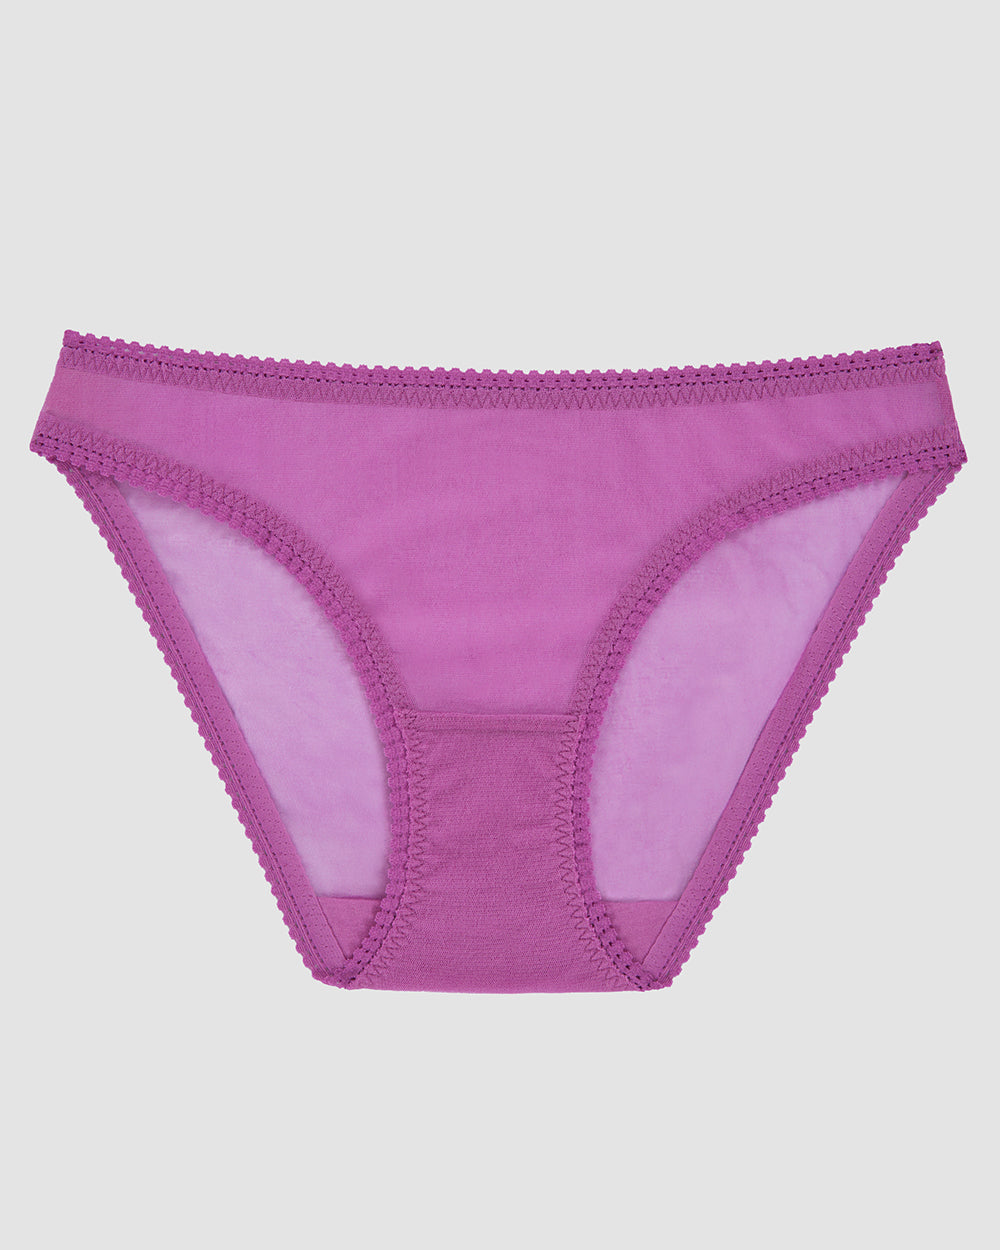 Striking purple Gossamer Mesh Hip Bikini Underwear